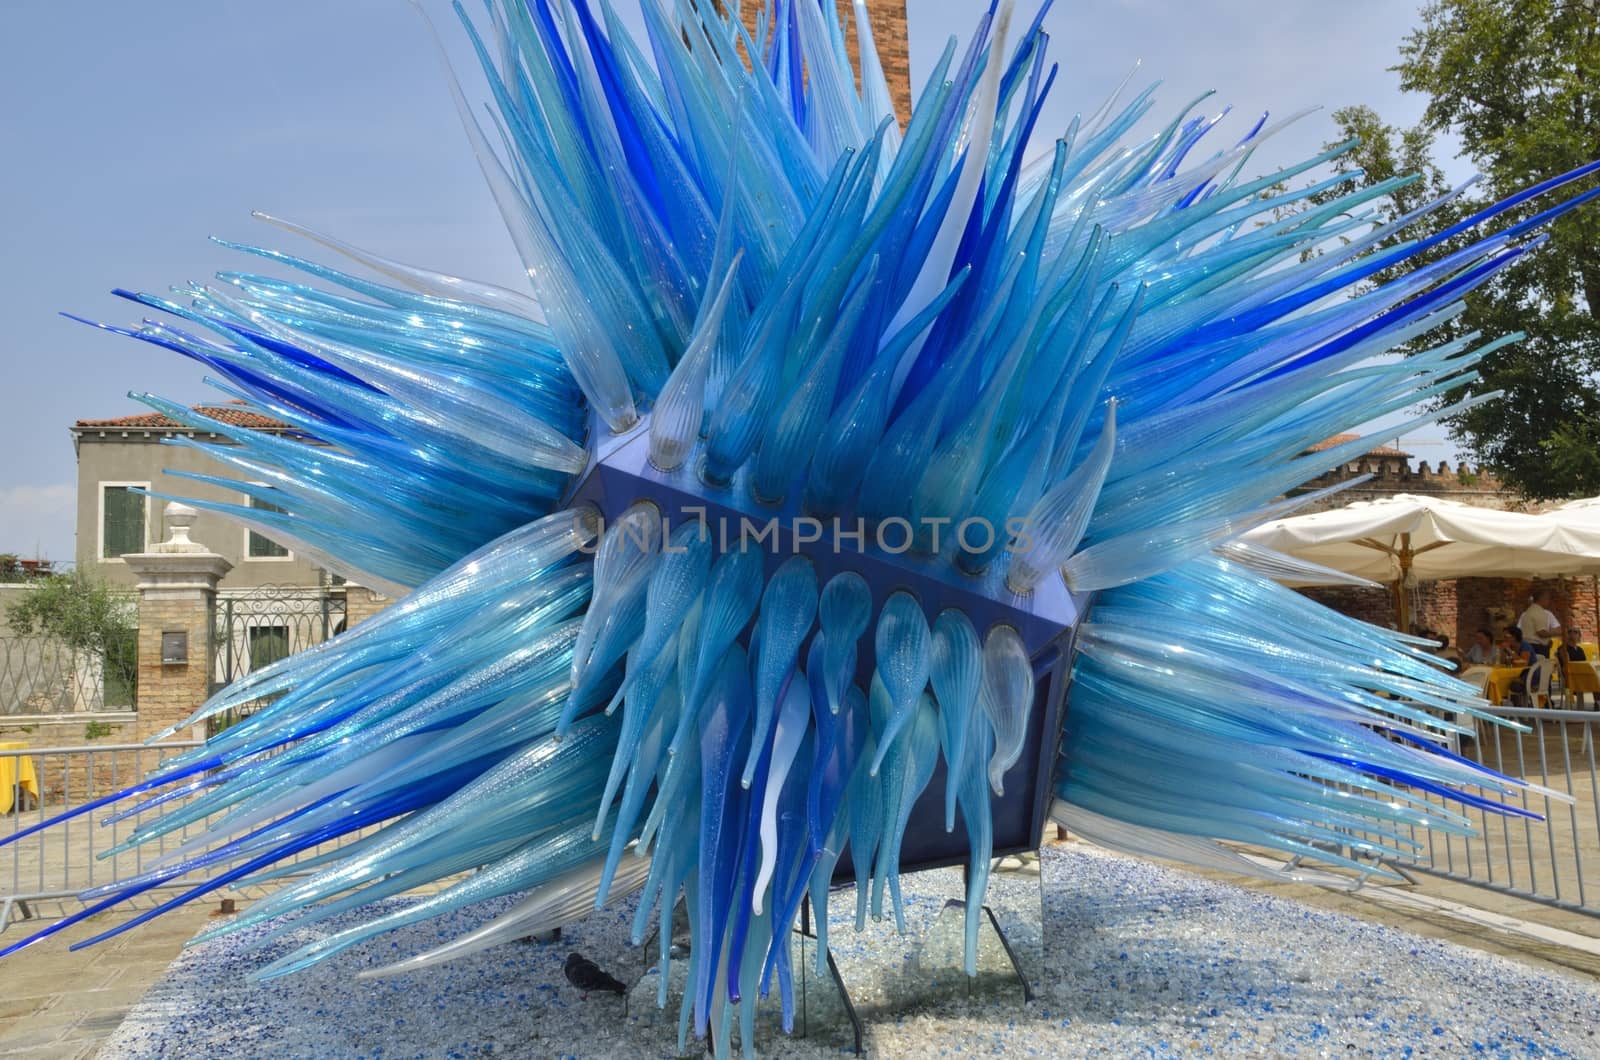 Blue murano glass sculpture  in a sqaure in Murano, Venice, Italy.